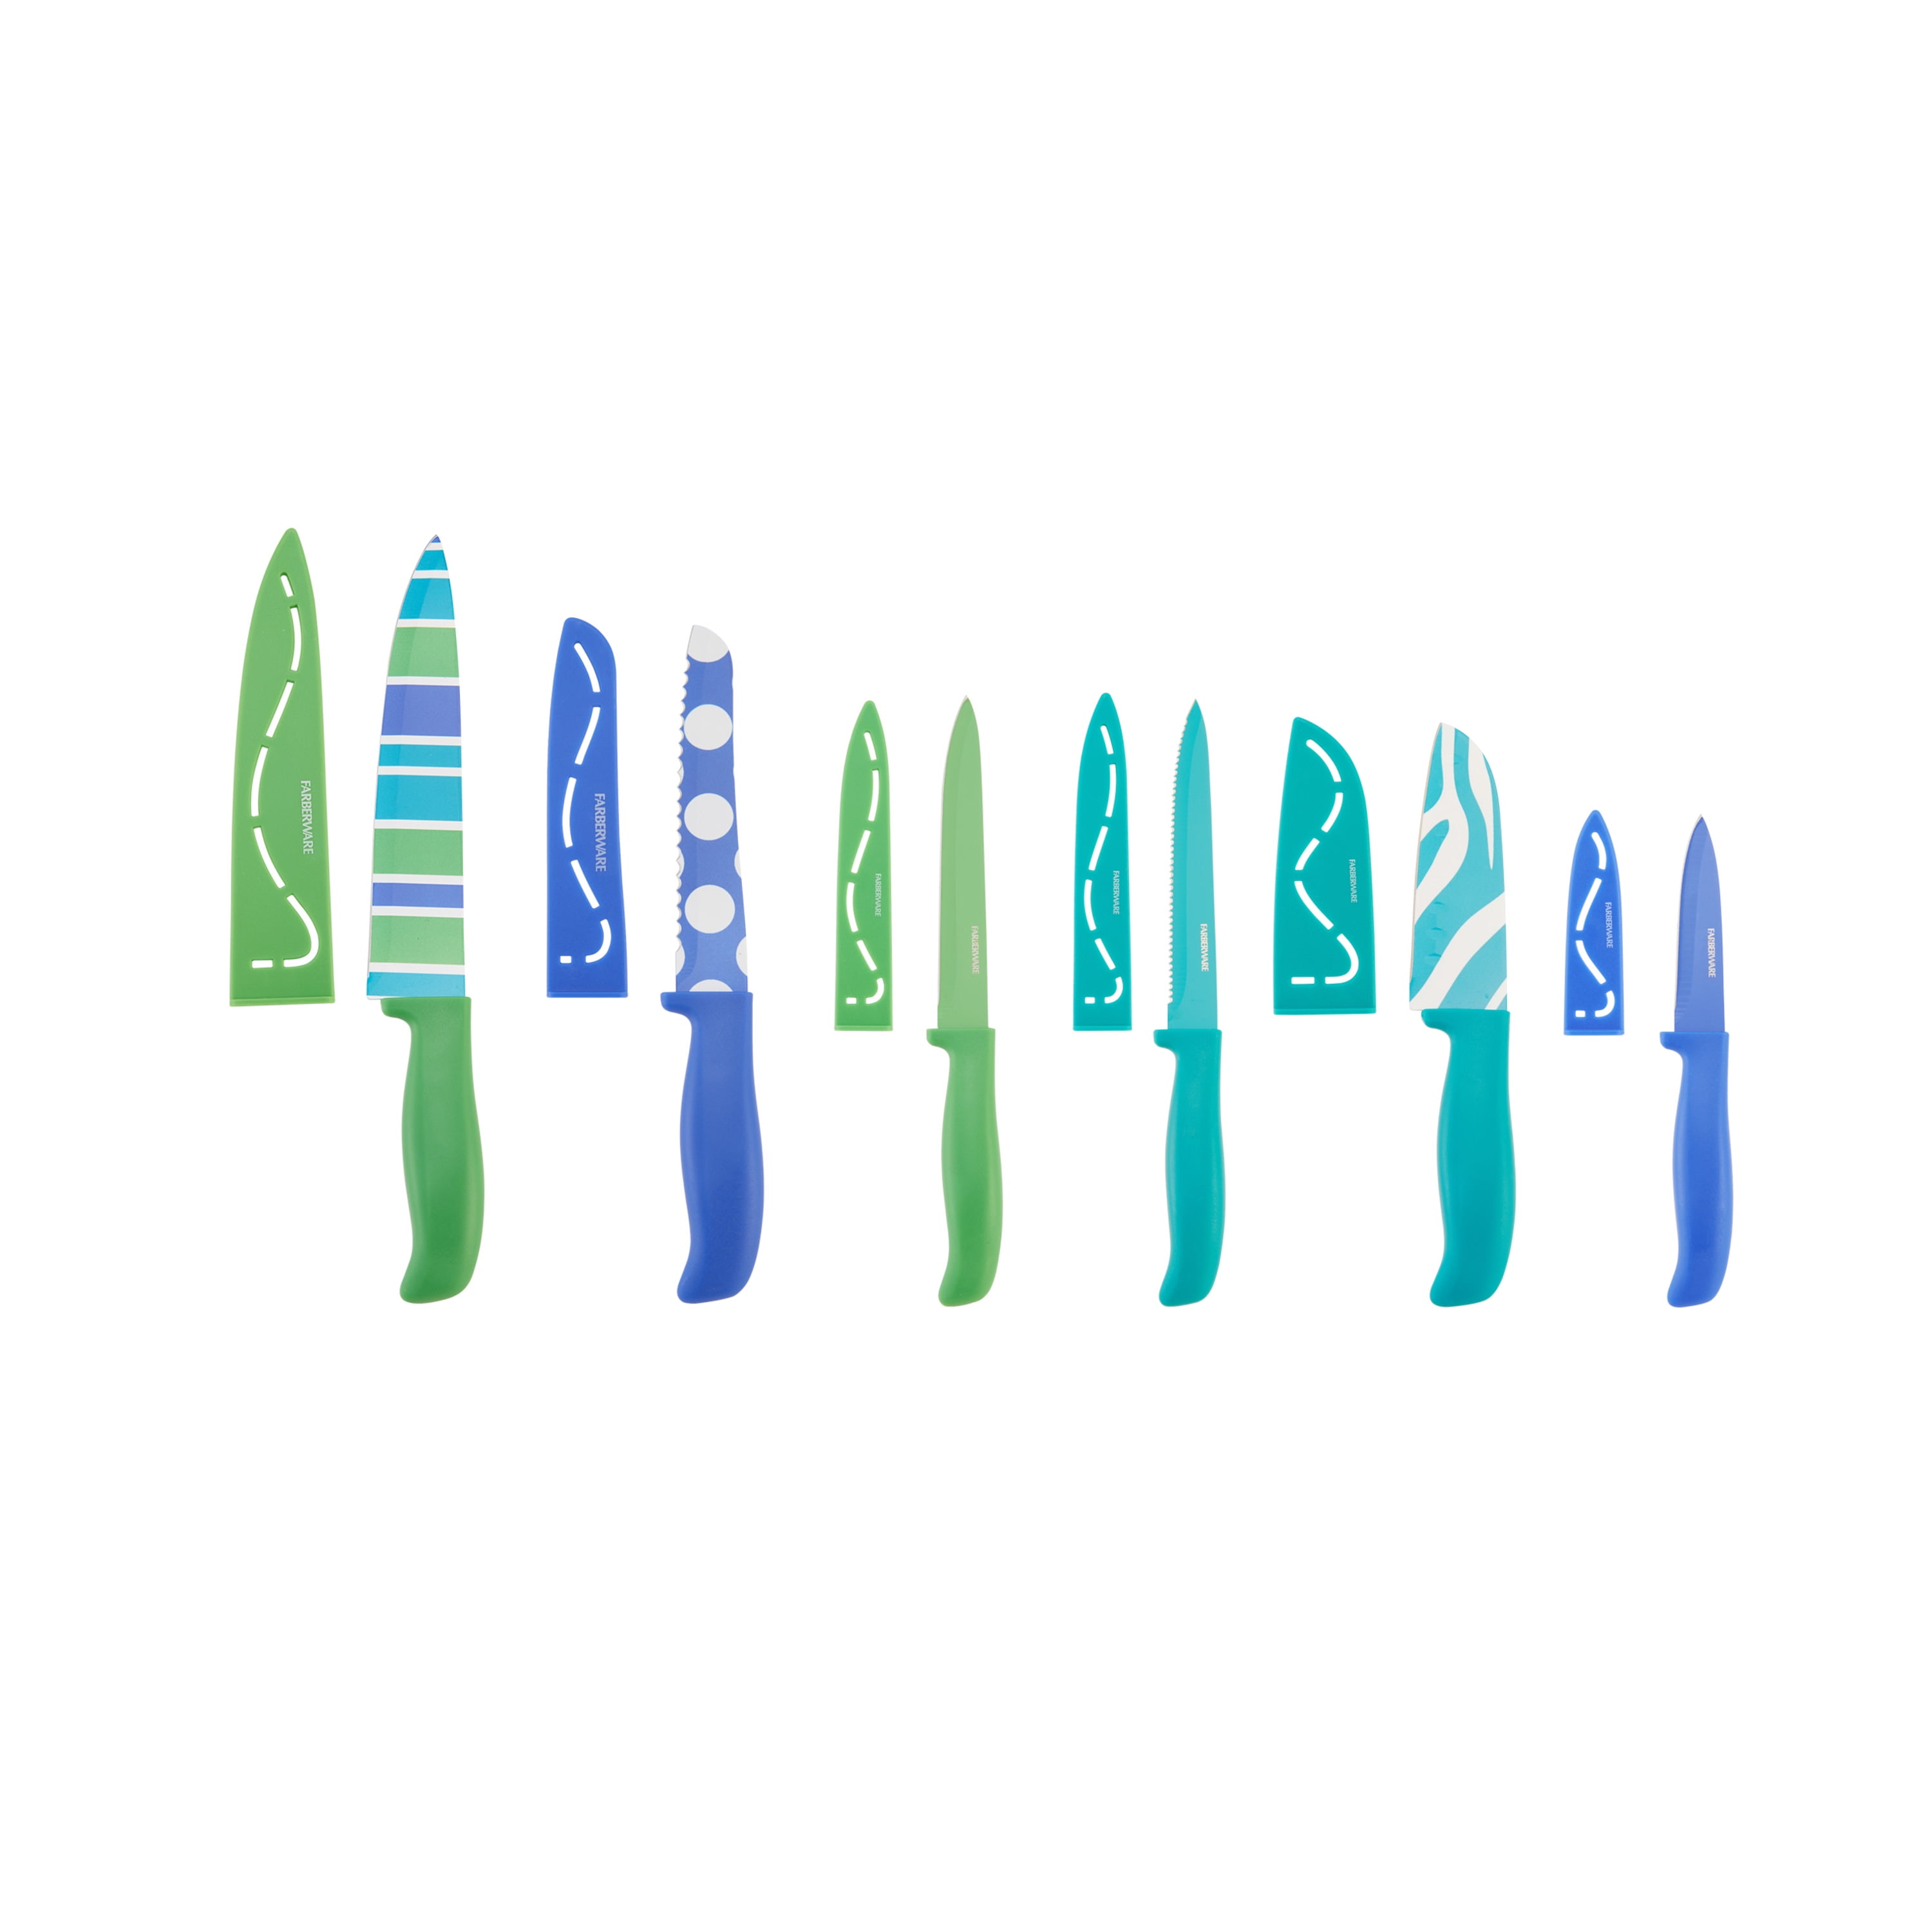 Peterson Housewares Inc. U Handle Ceramic 12 Piece Knife Block Set Color: Blue/Orange/Green CE0956010PDQ